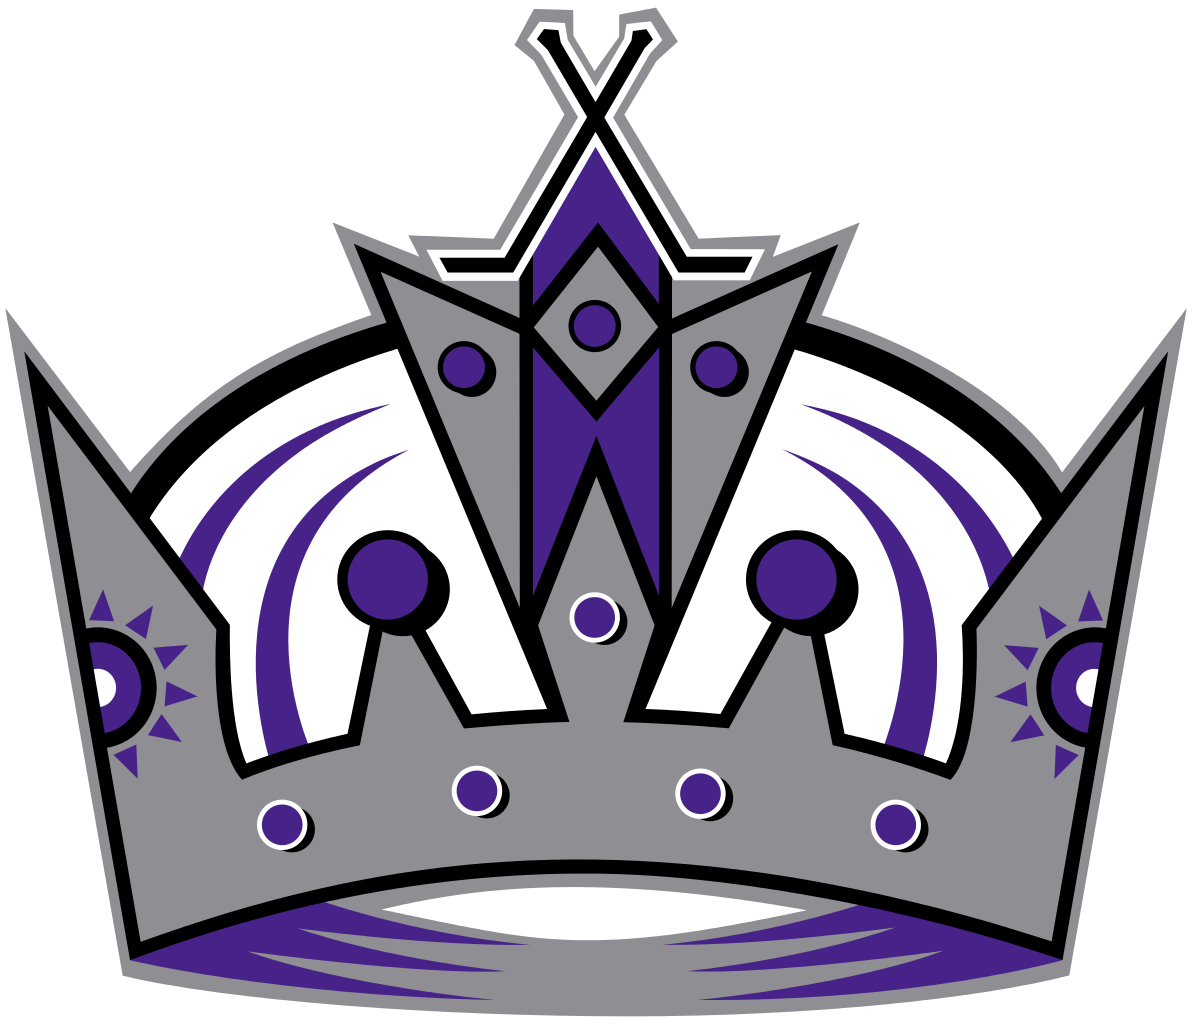 File:Los Angeles Kings.svg - Wikipedia, the free encyclopedia